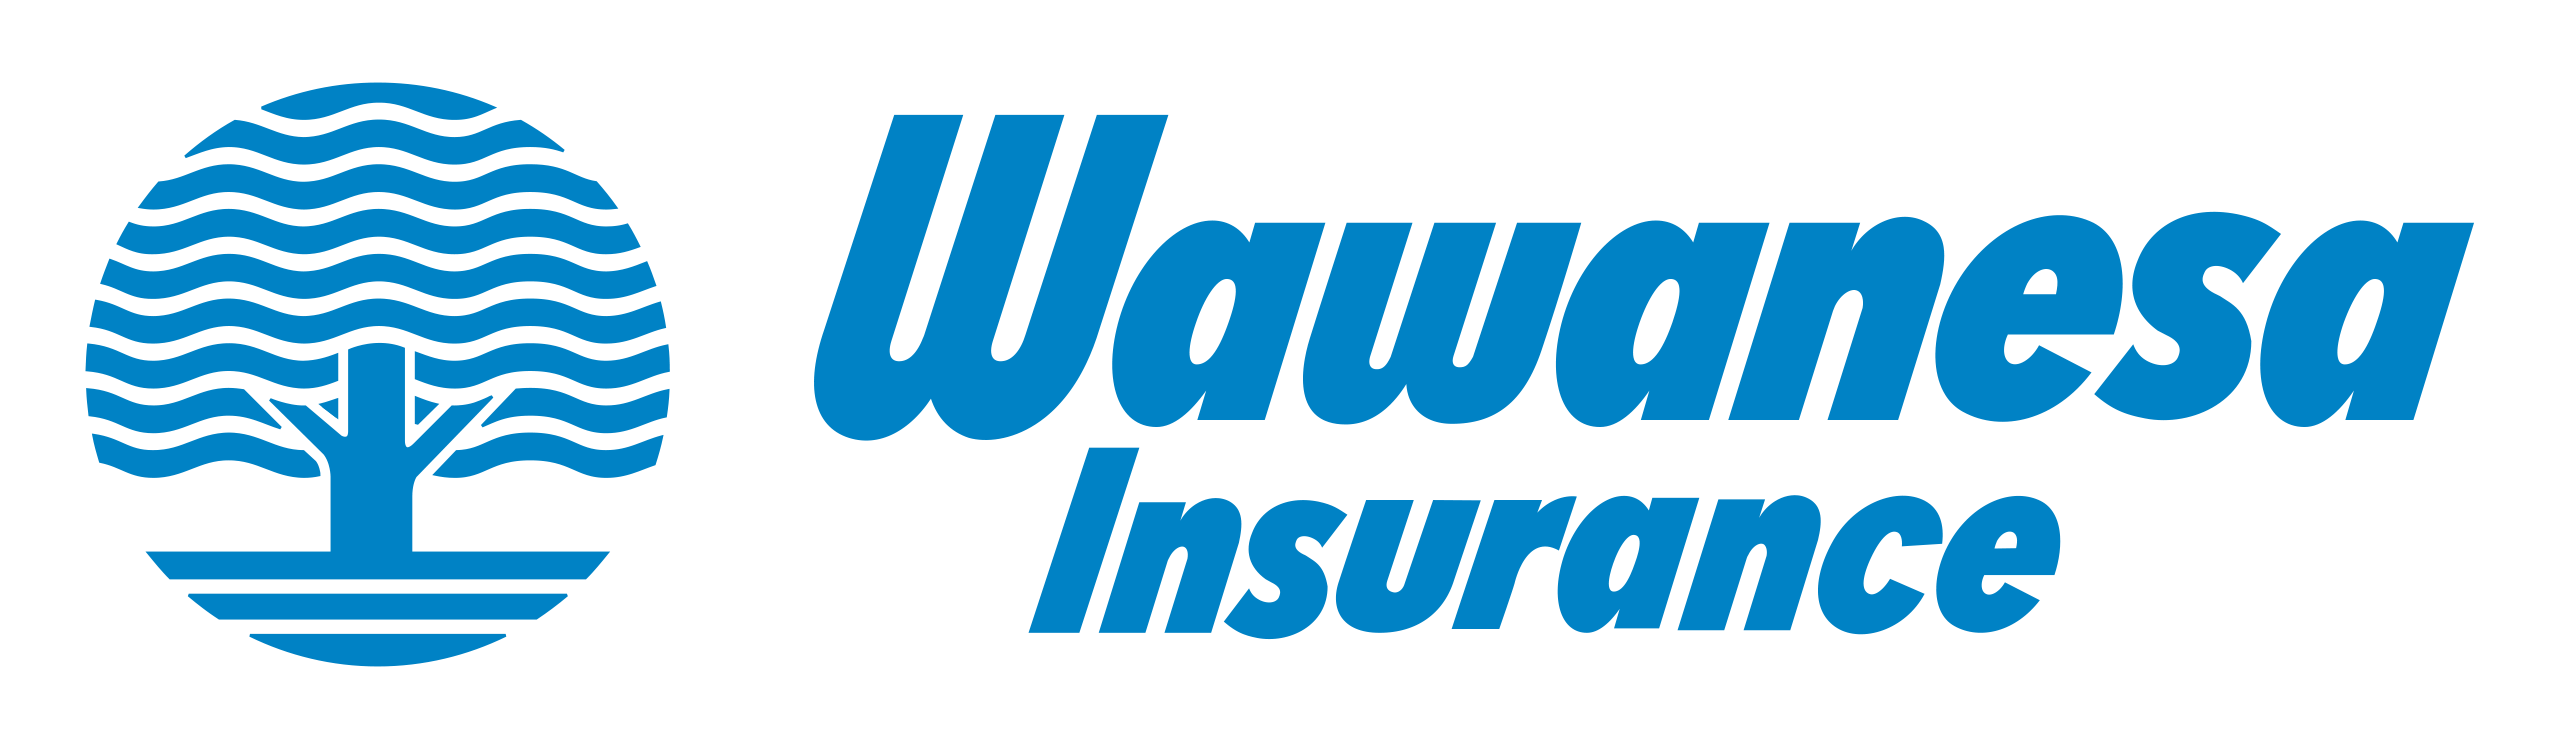 wawanesa-insurance-blue-for-screen-only-1